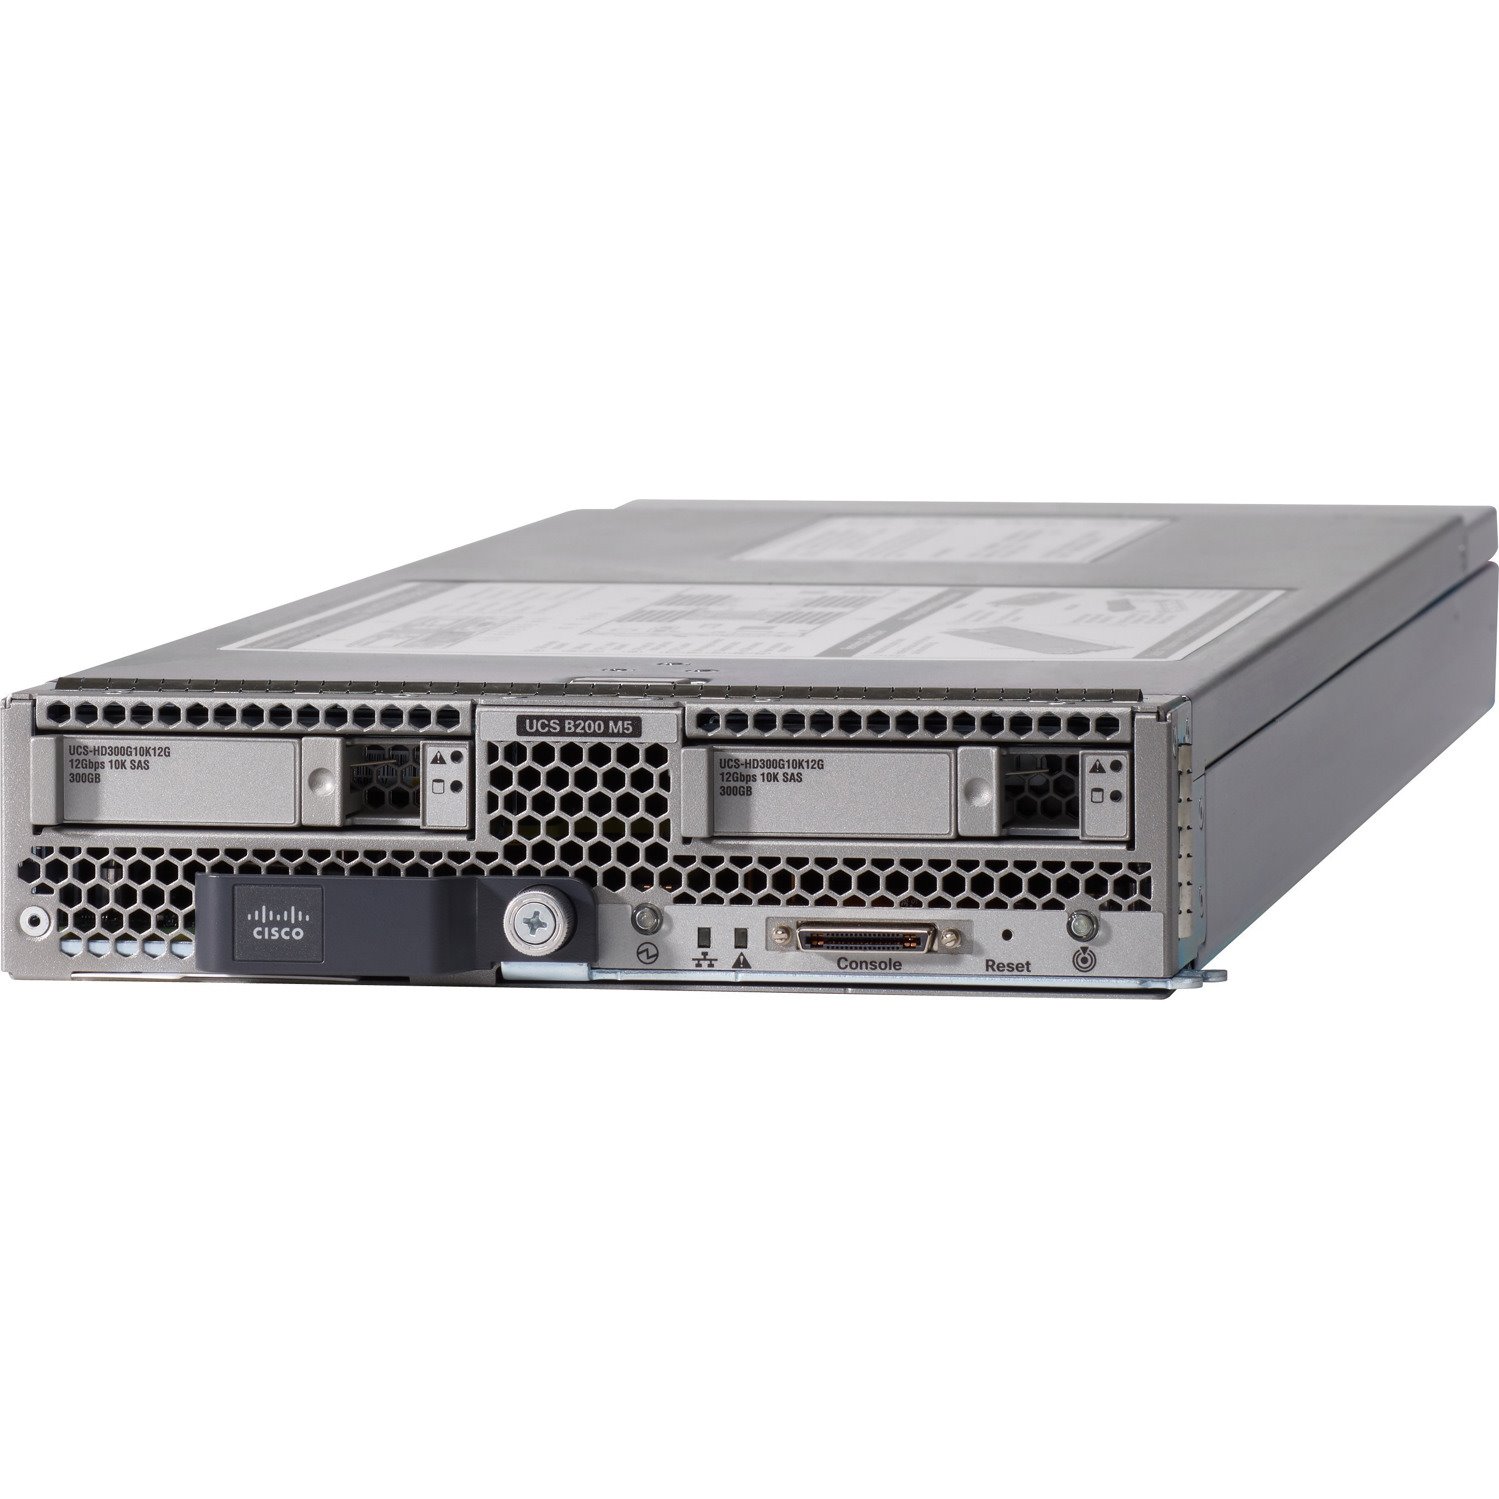 Cisco B200 M5 UCSB-B200M5-RSV1B Blade Server - 2 x Intel Xeon 6226R 2.80 GHz - 64 GB RAM - 240 GB SSD - (1 x 240GB) SSD Configuration - 12Gb/s SAS Controller